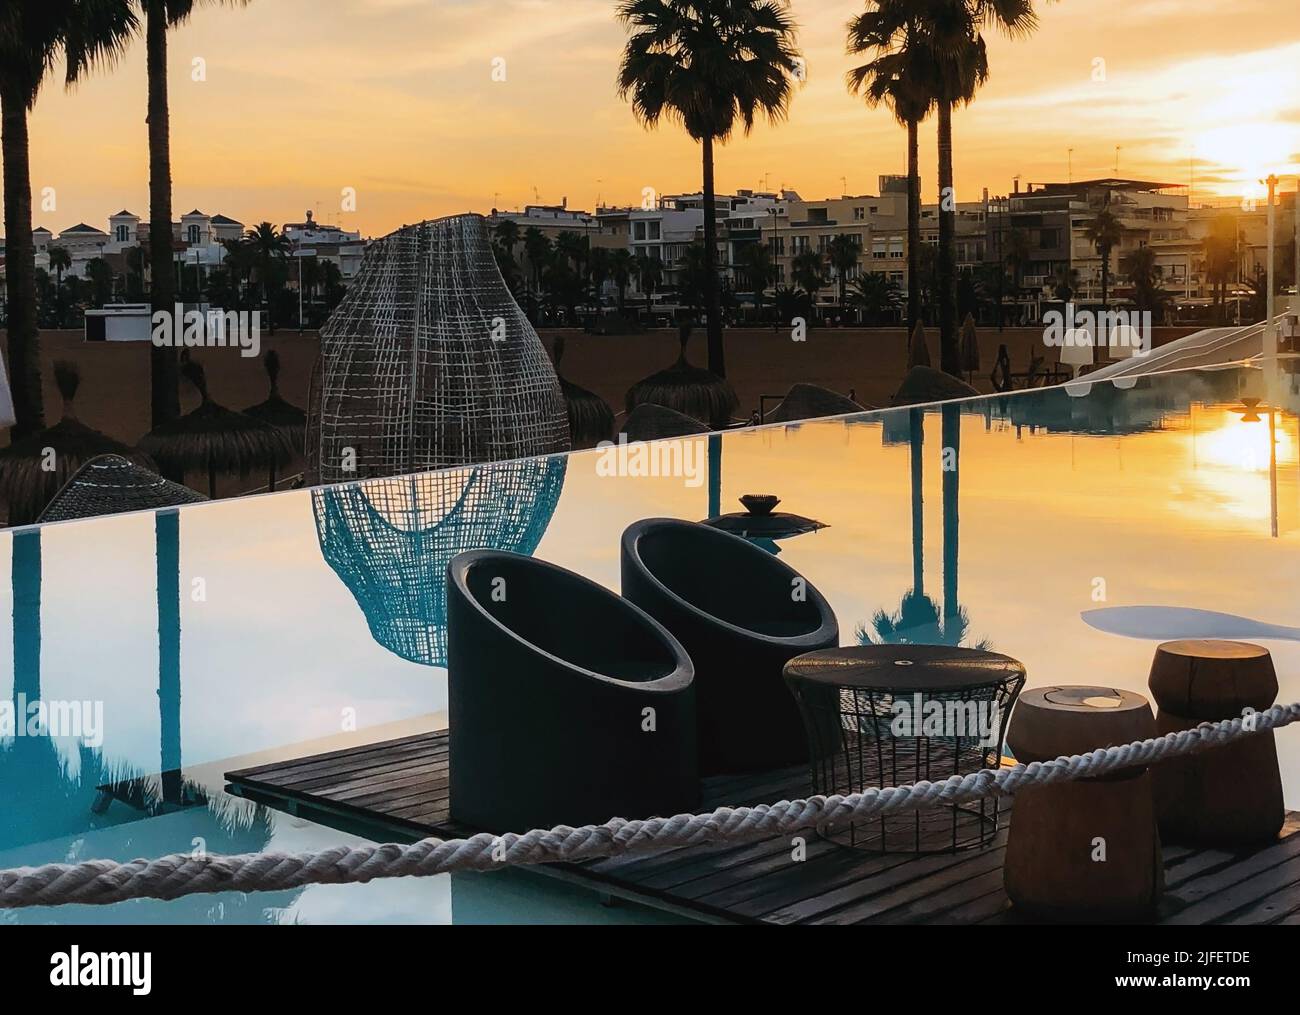 Luxury swimming pool on the beach Stock Photo